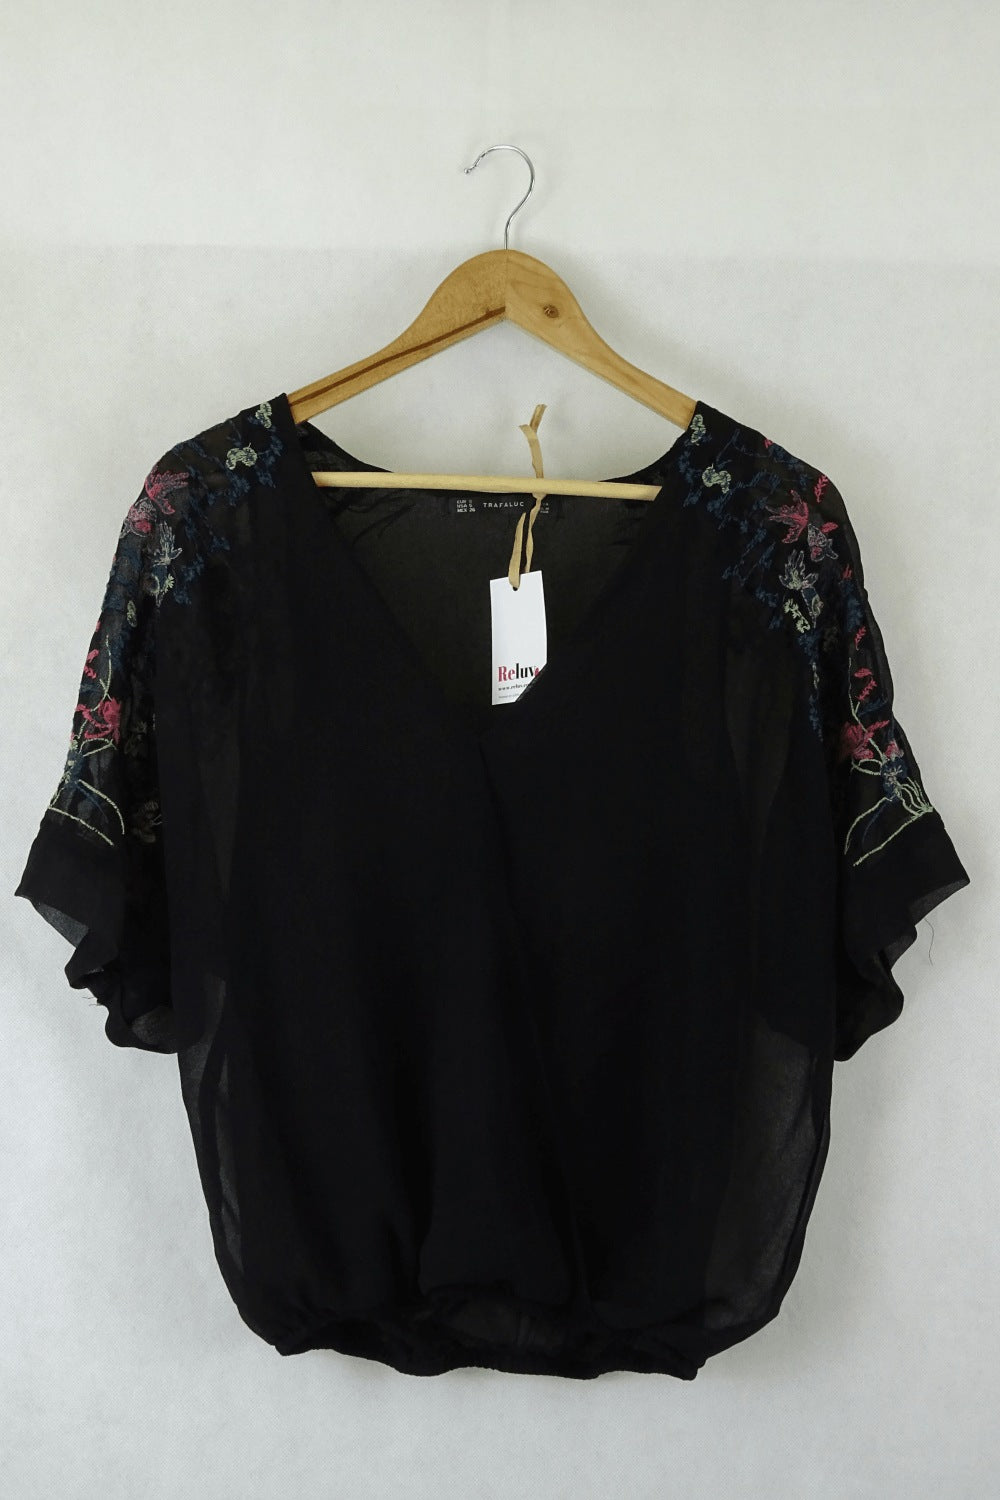 Zara Black Embroided Blouse S